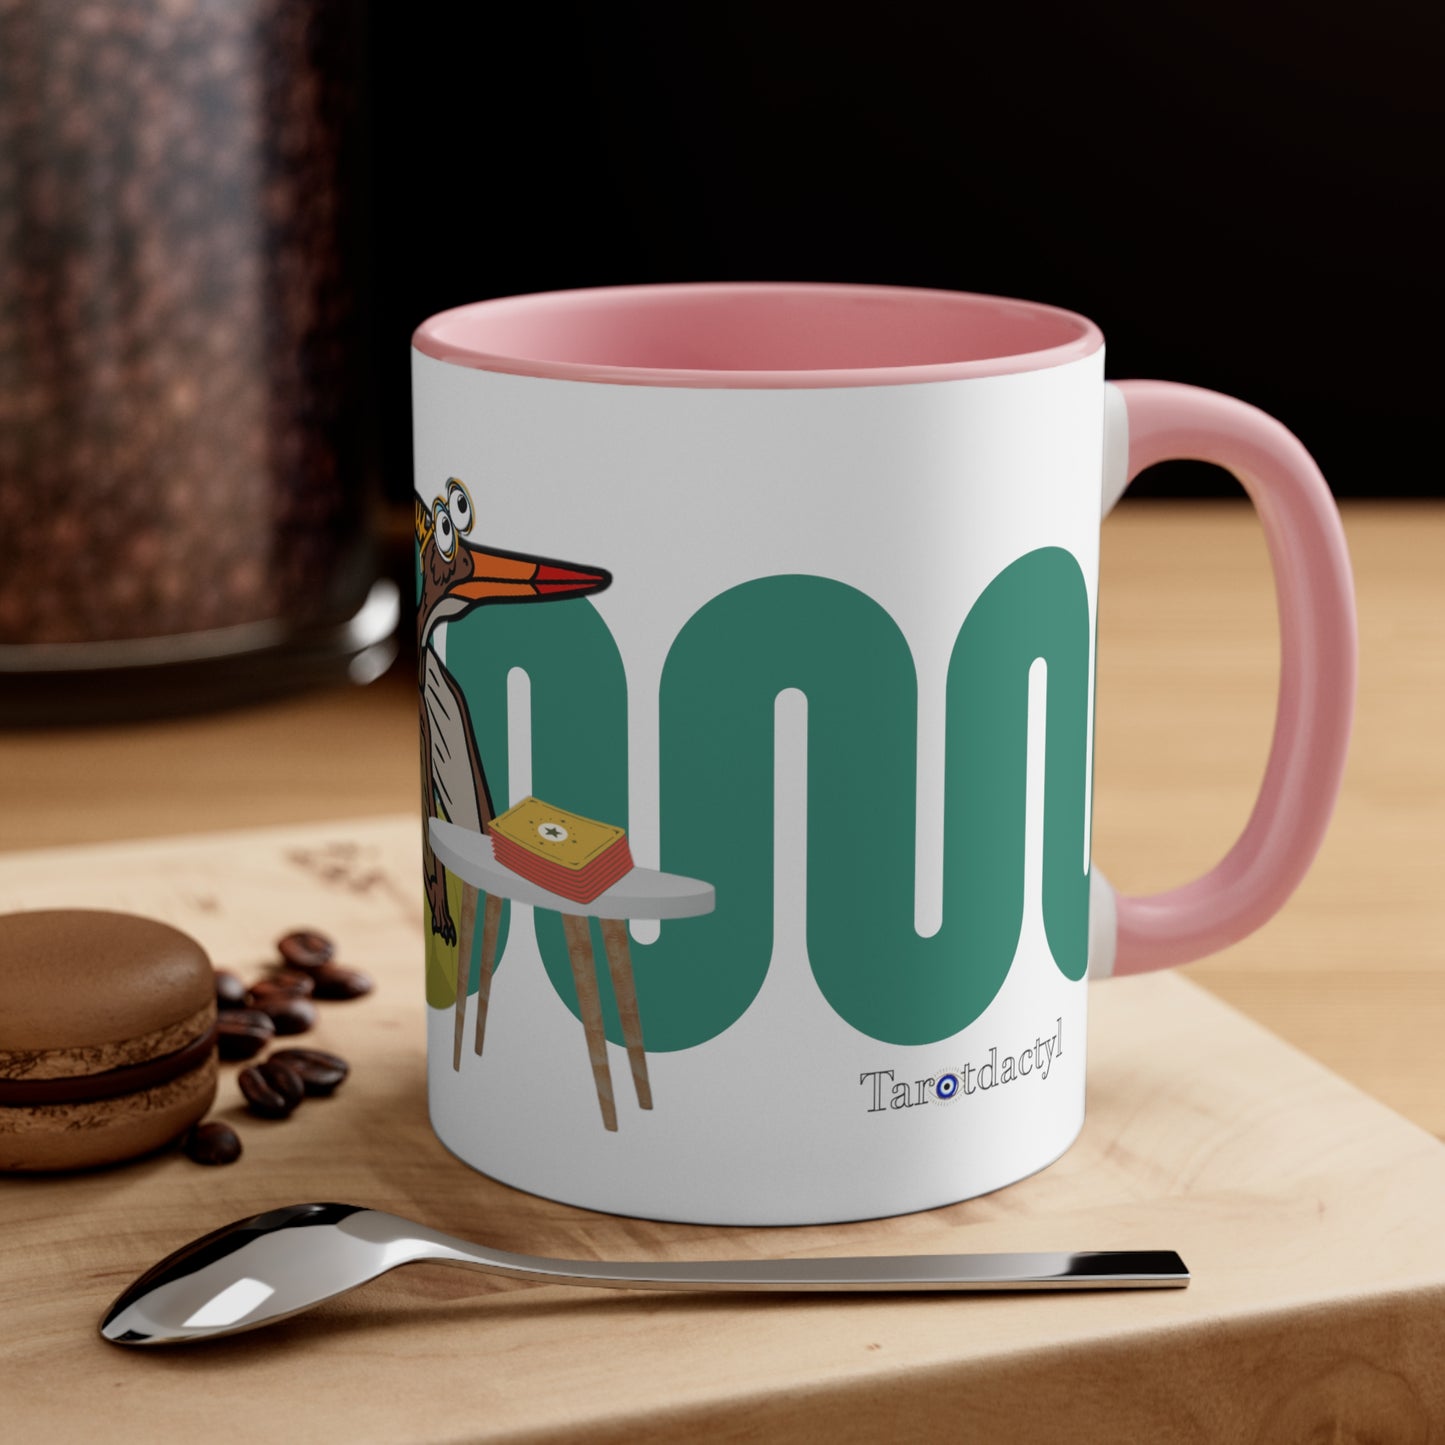 Tarotdactyl Accent Coffee Mug, 11oz